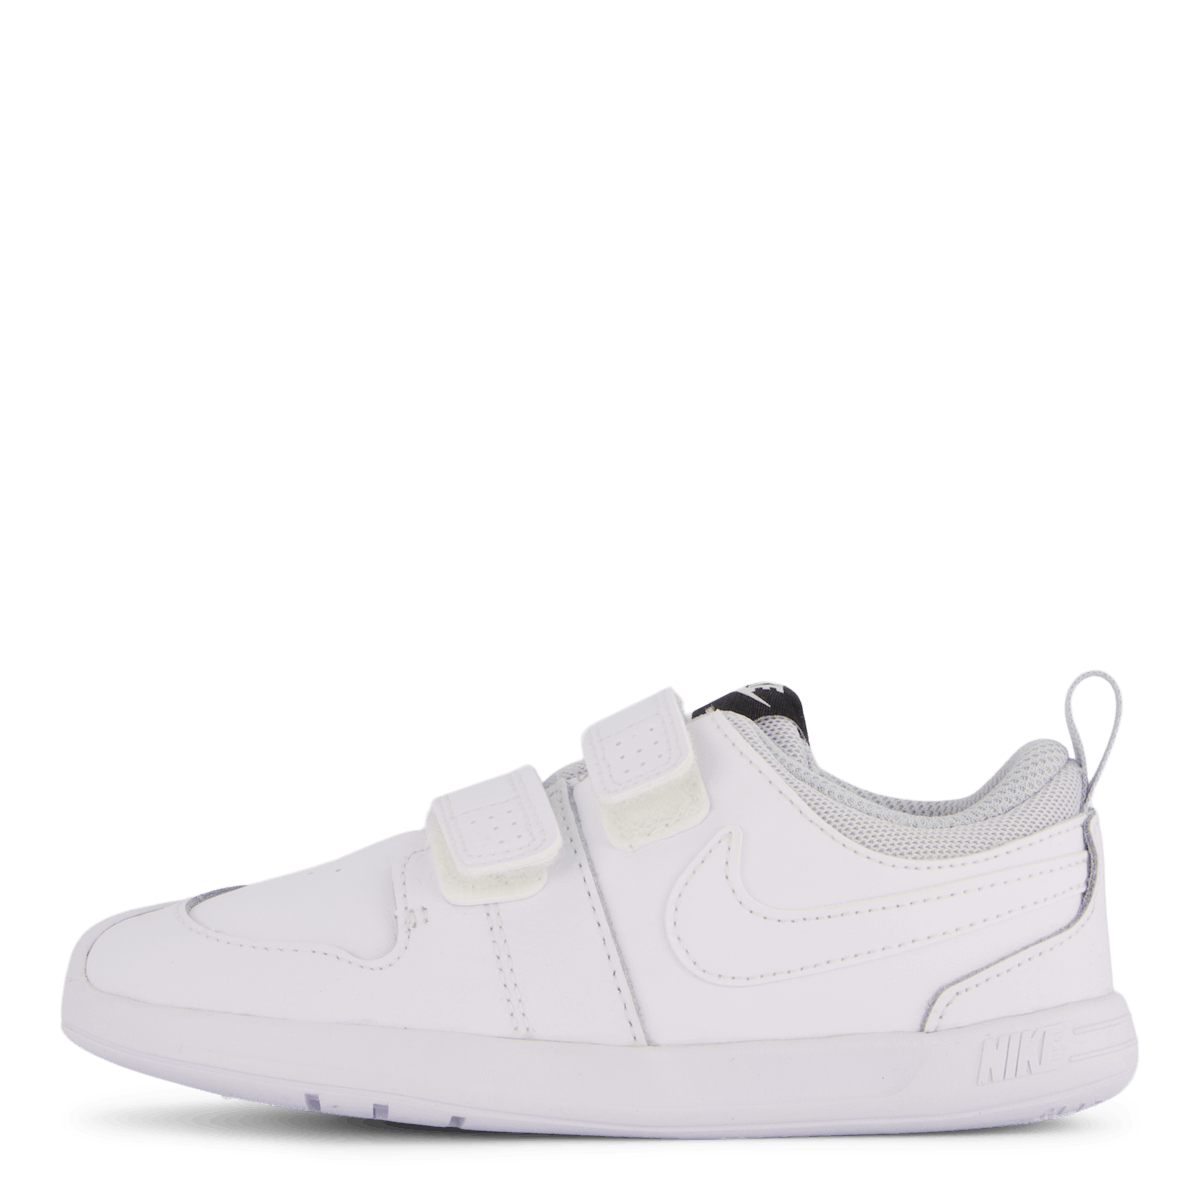 Pico 5 Infant/Toddler Shoes WHITE/WHITE-PURE PLATINUM